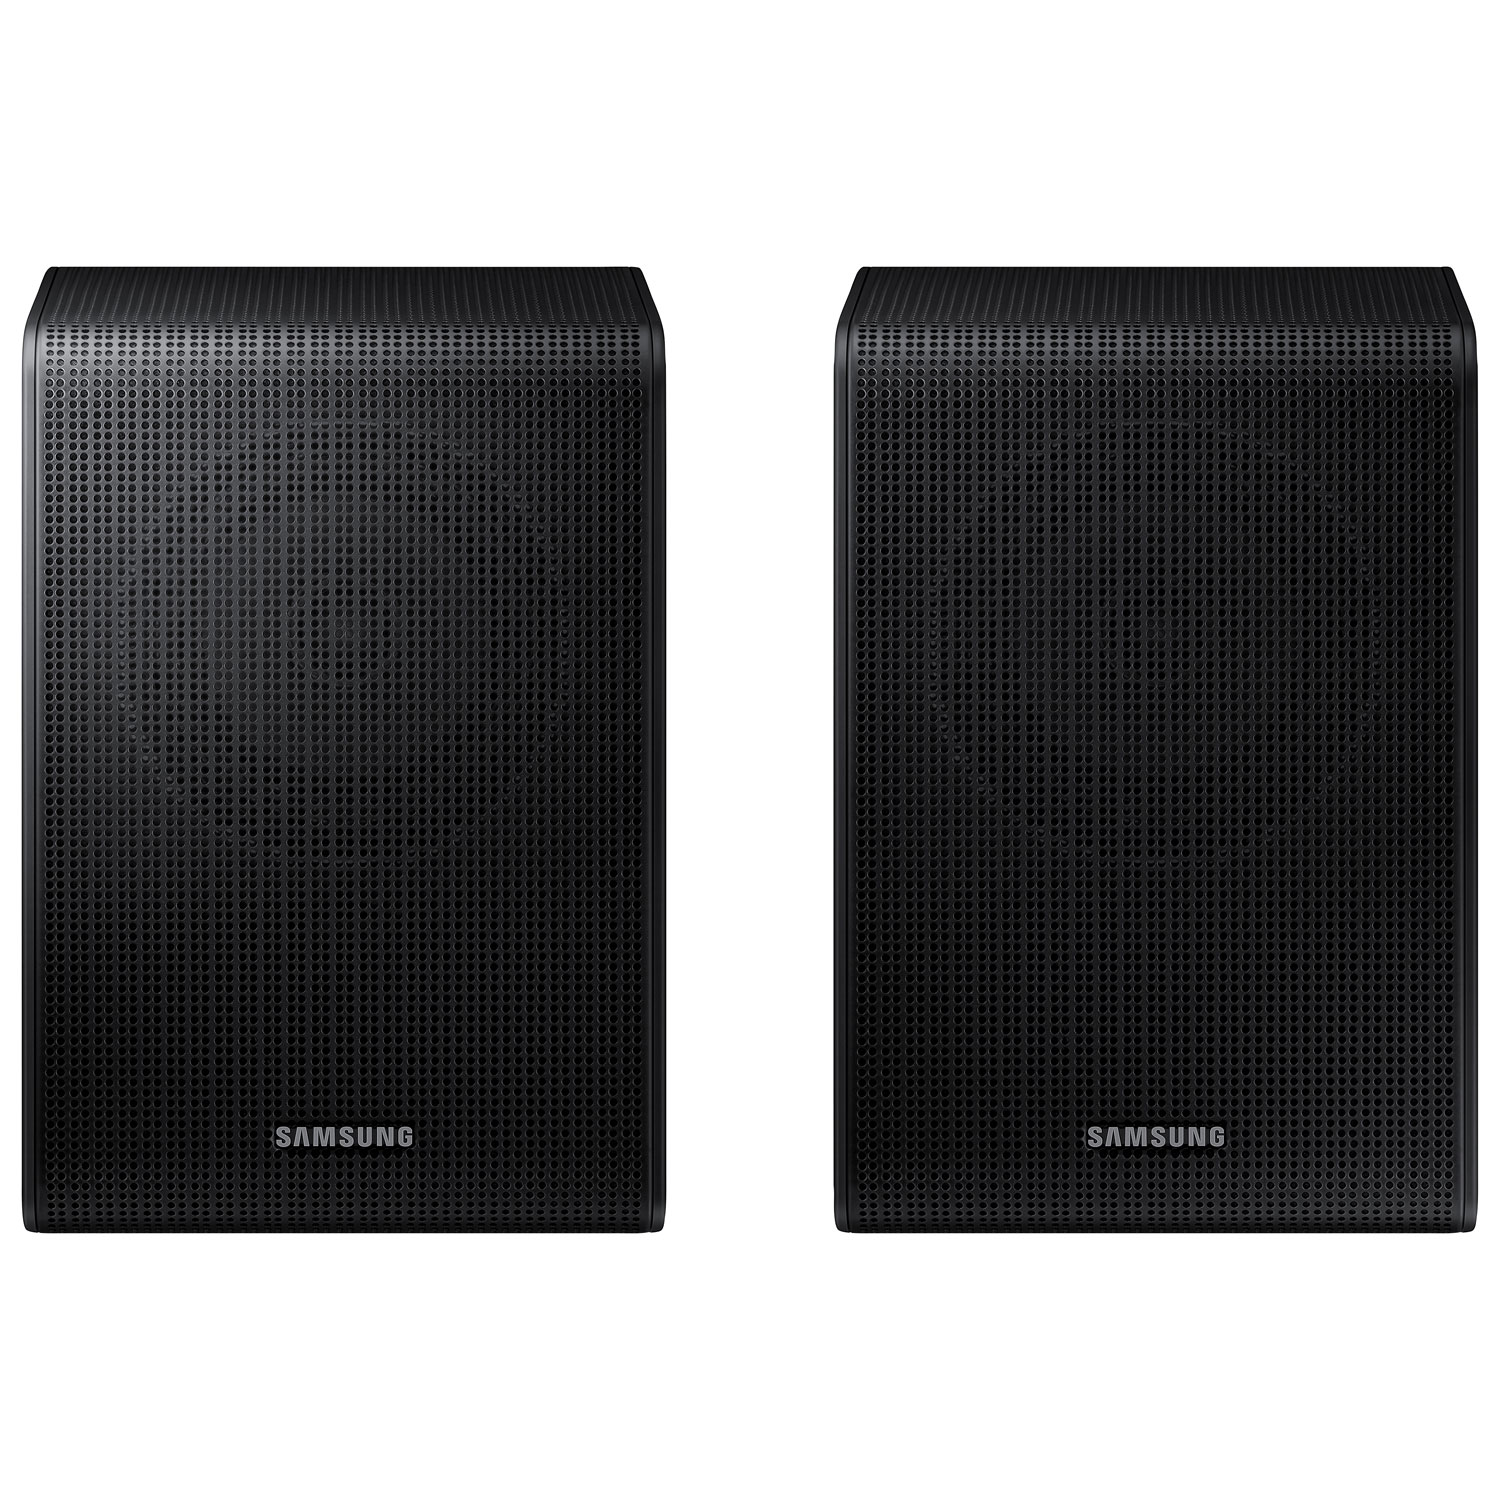 Samsung SWA-9200S Wireless Rear Speaker - Pair - Black